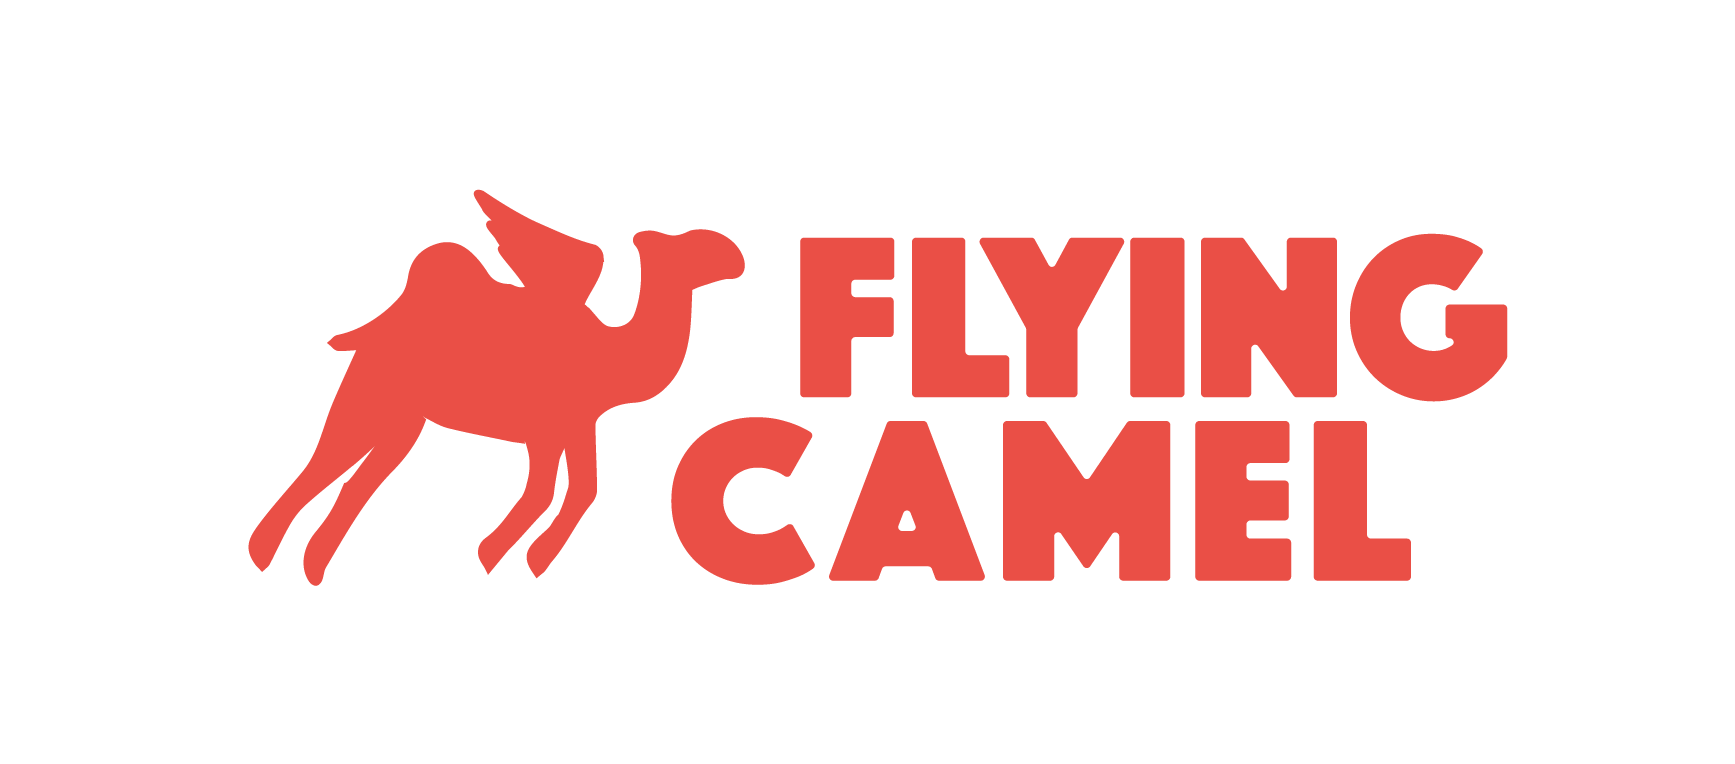 flying camel